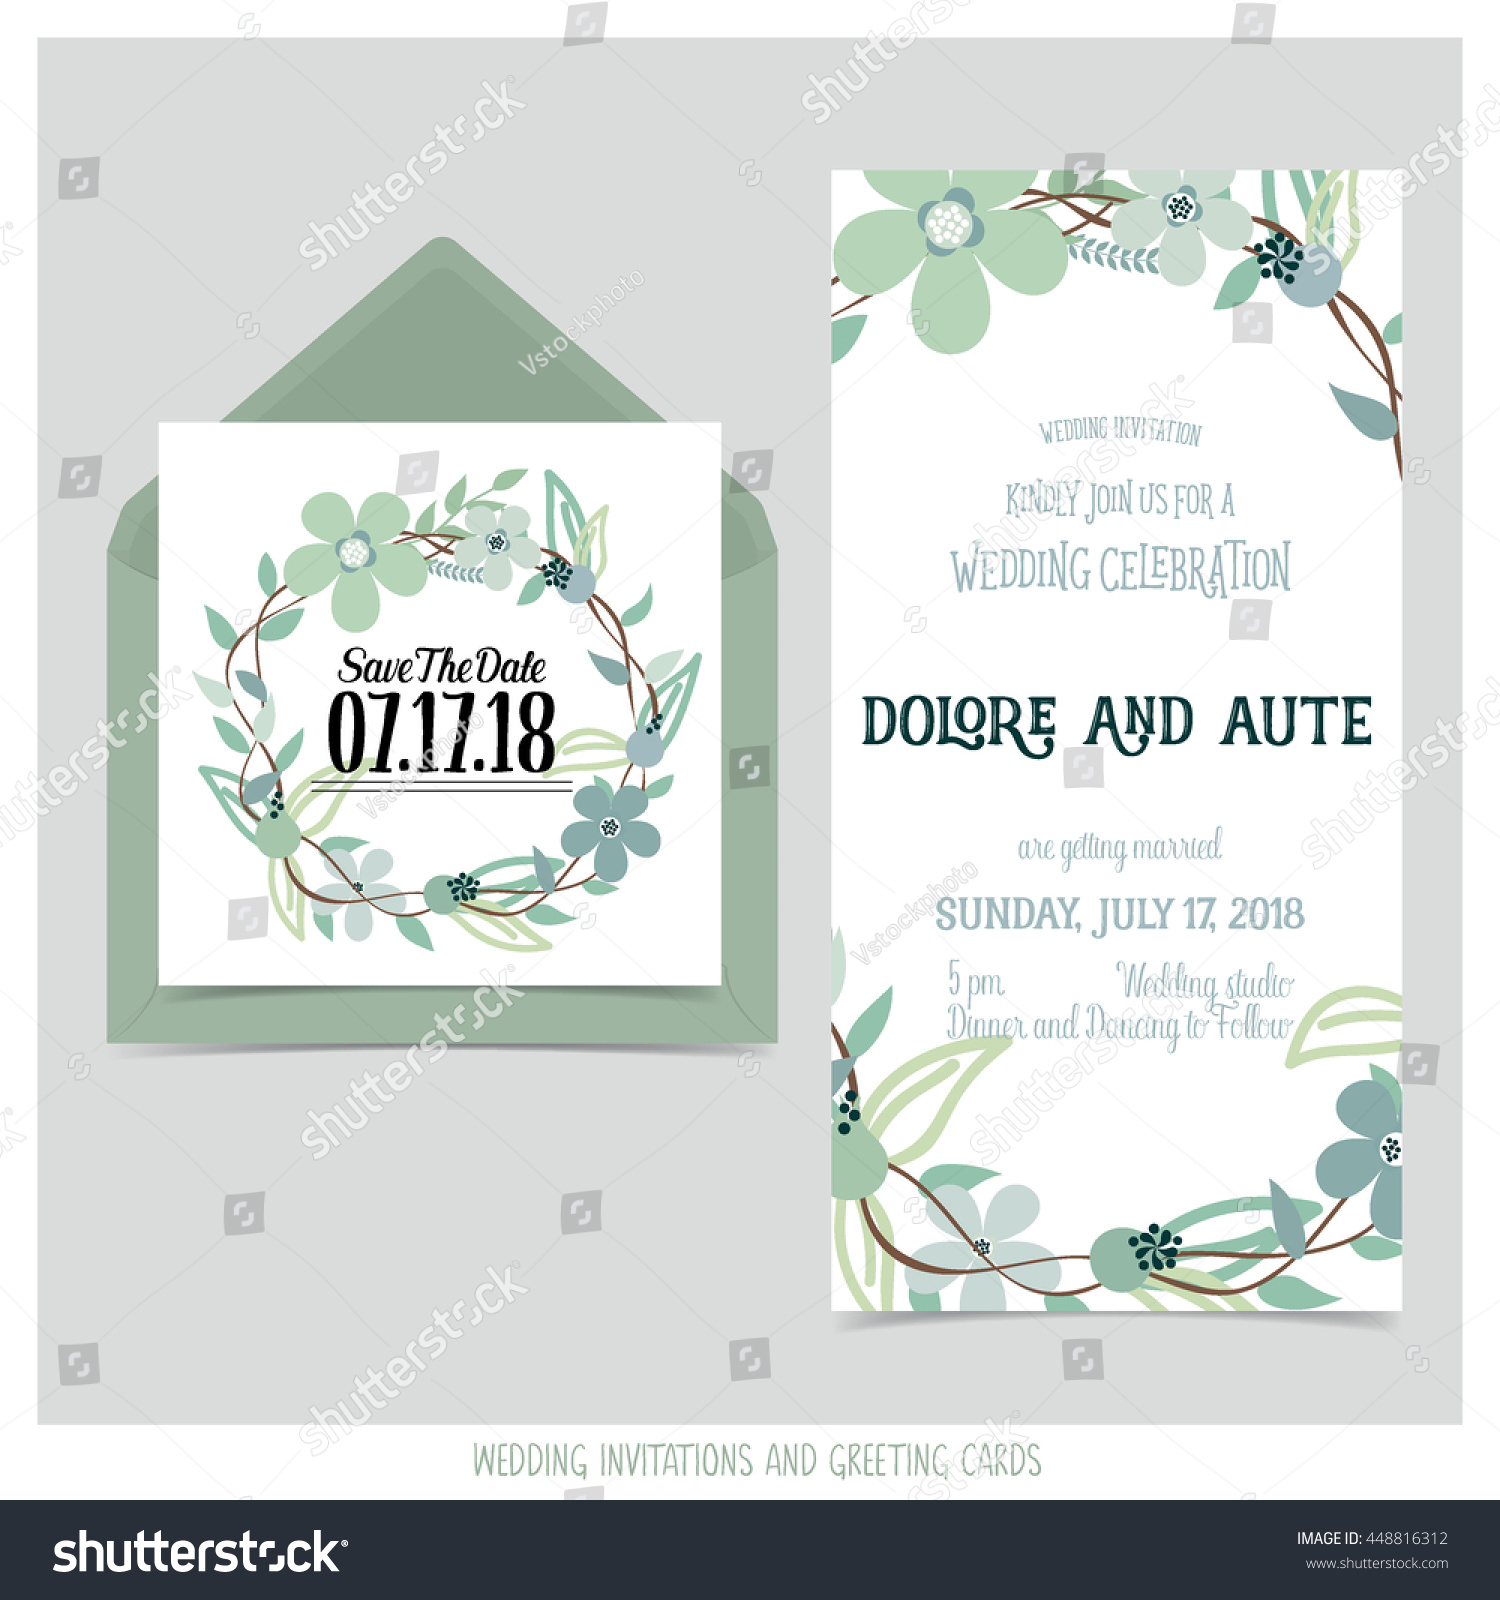 Wedding Invitation Card Romantic Flower Templates Stock Vector regarding dimensions 1500 X 1600